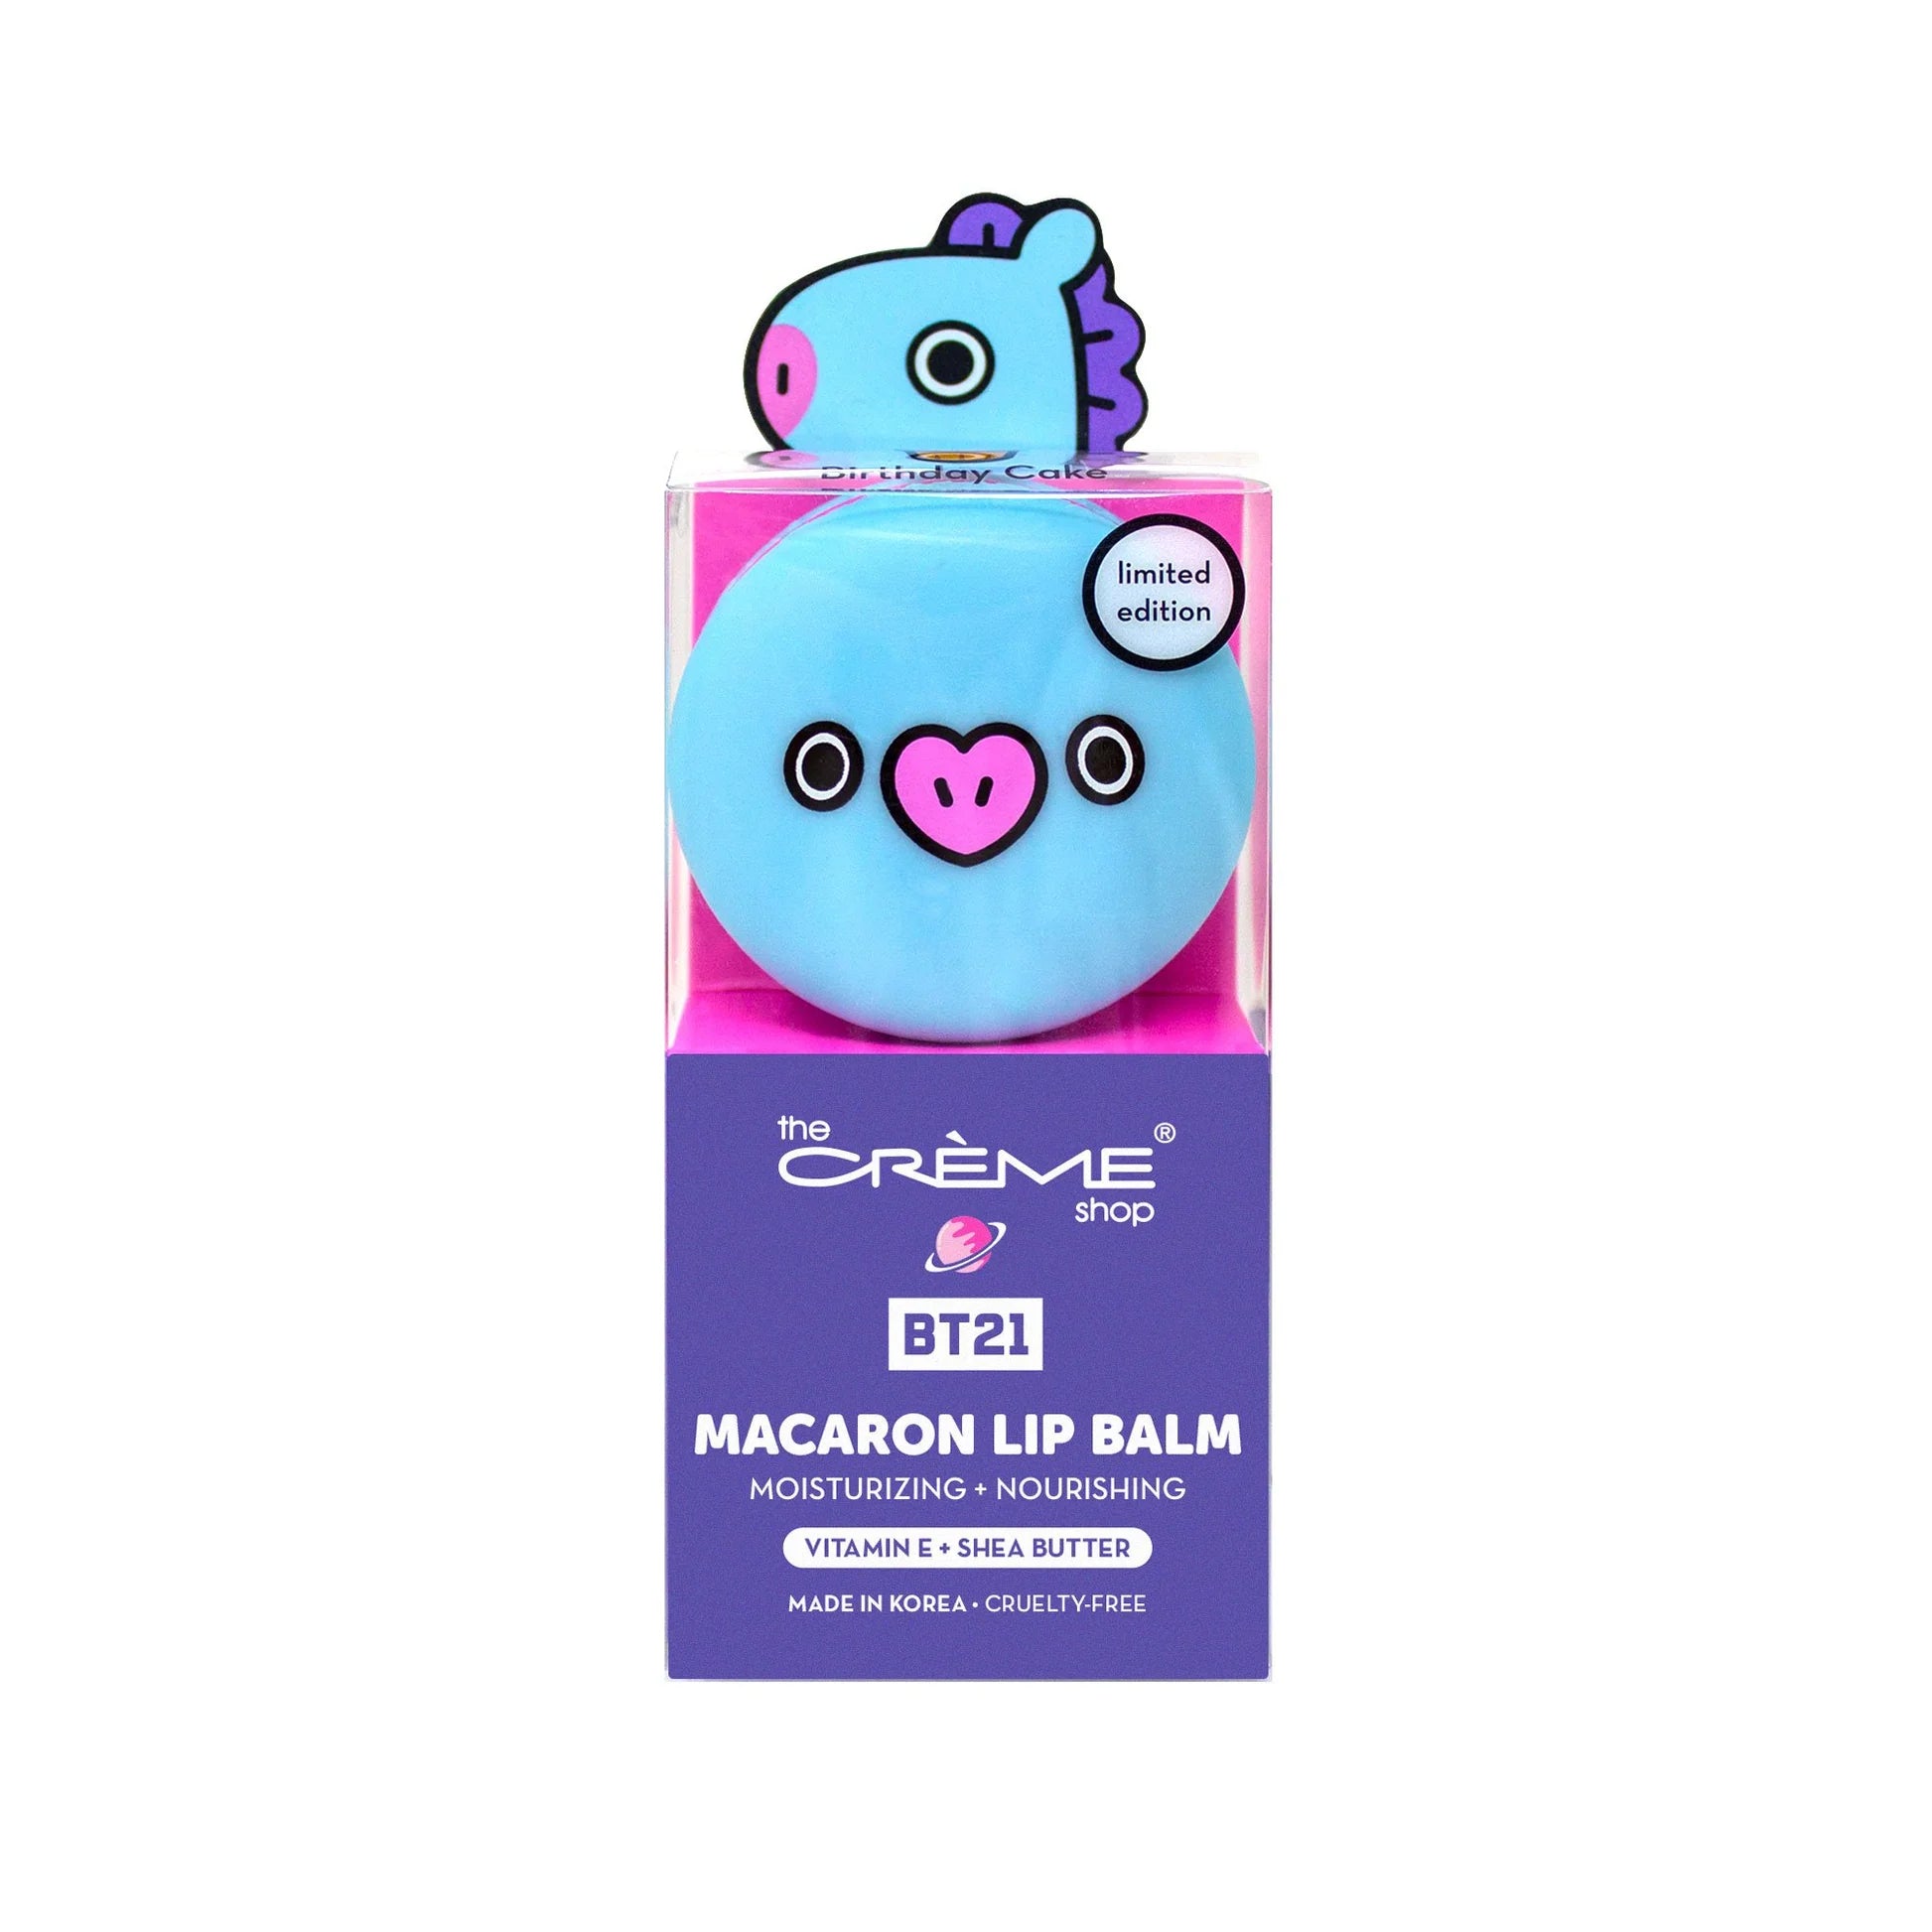 MANG_Macaron-Lip-Balm_box.webp